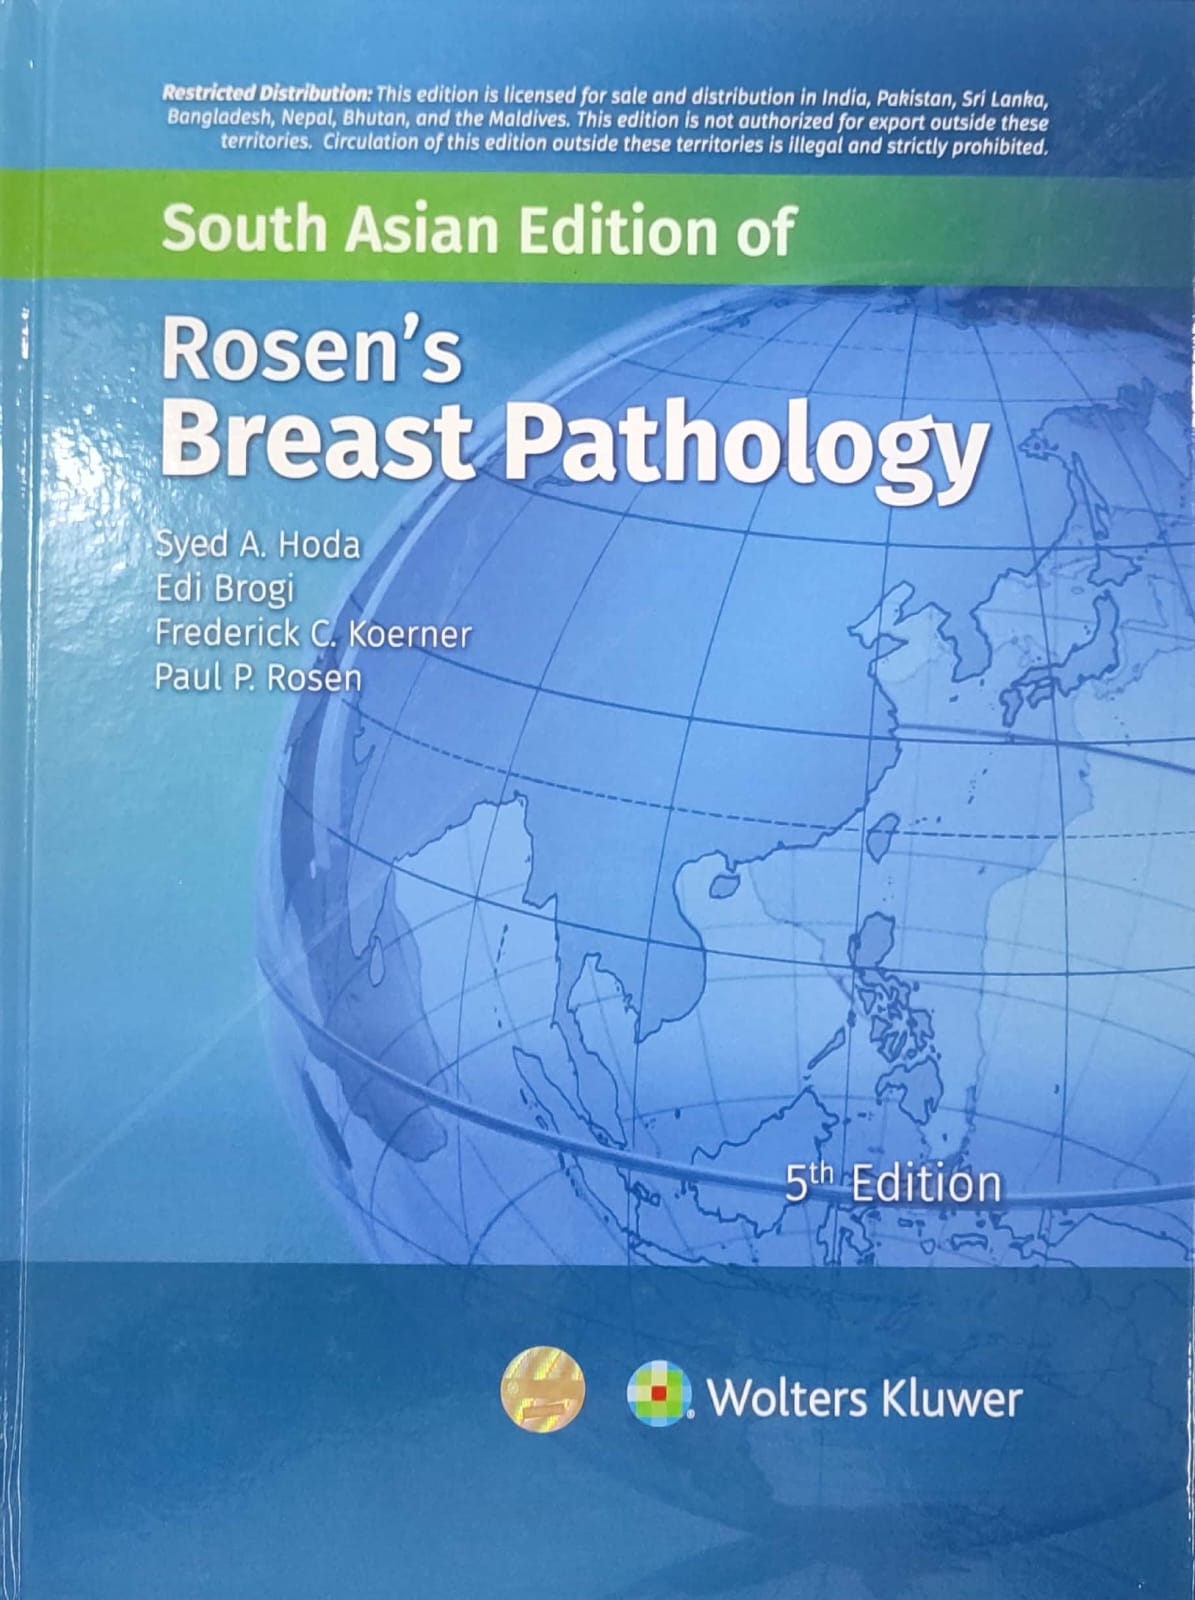 ROSEN'S BREAST PATHOLOGY- ISBN: 9789393553485